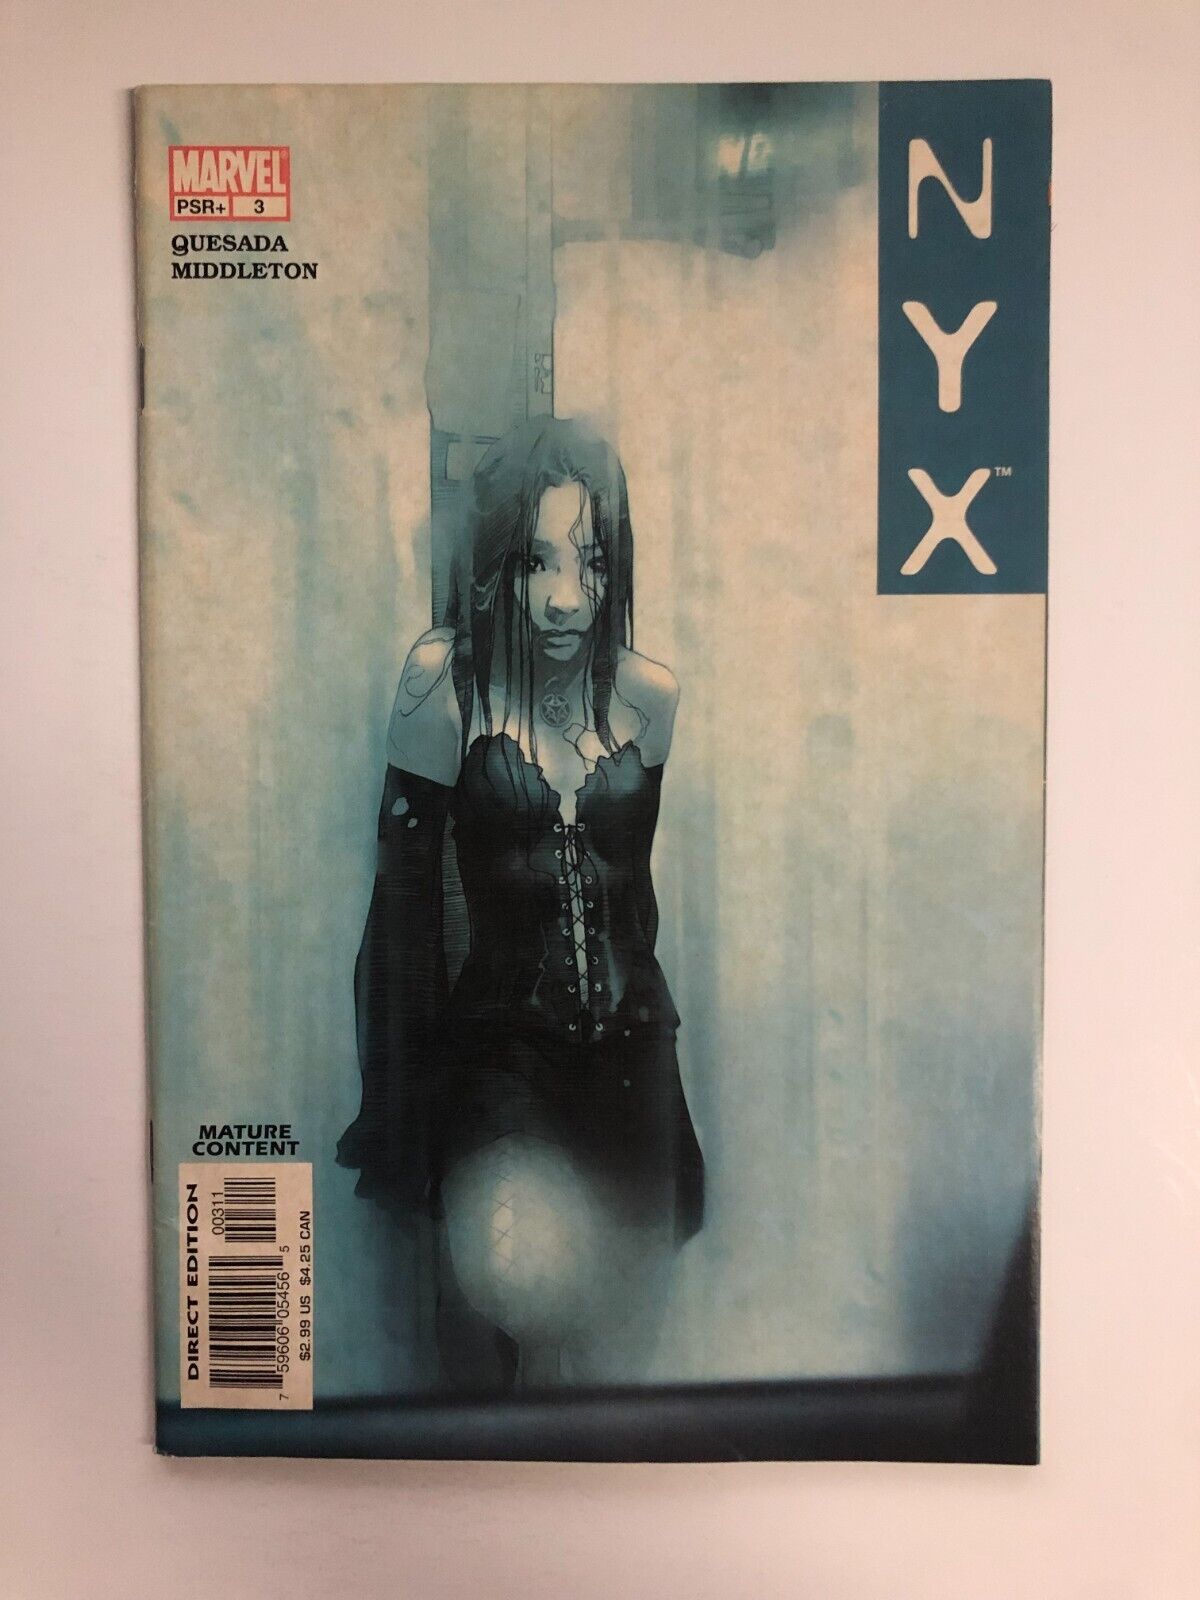 Nyx #3 - Joe Quesada - 2004 - Marvel Comics - 1st Appearance of X-23